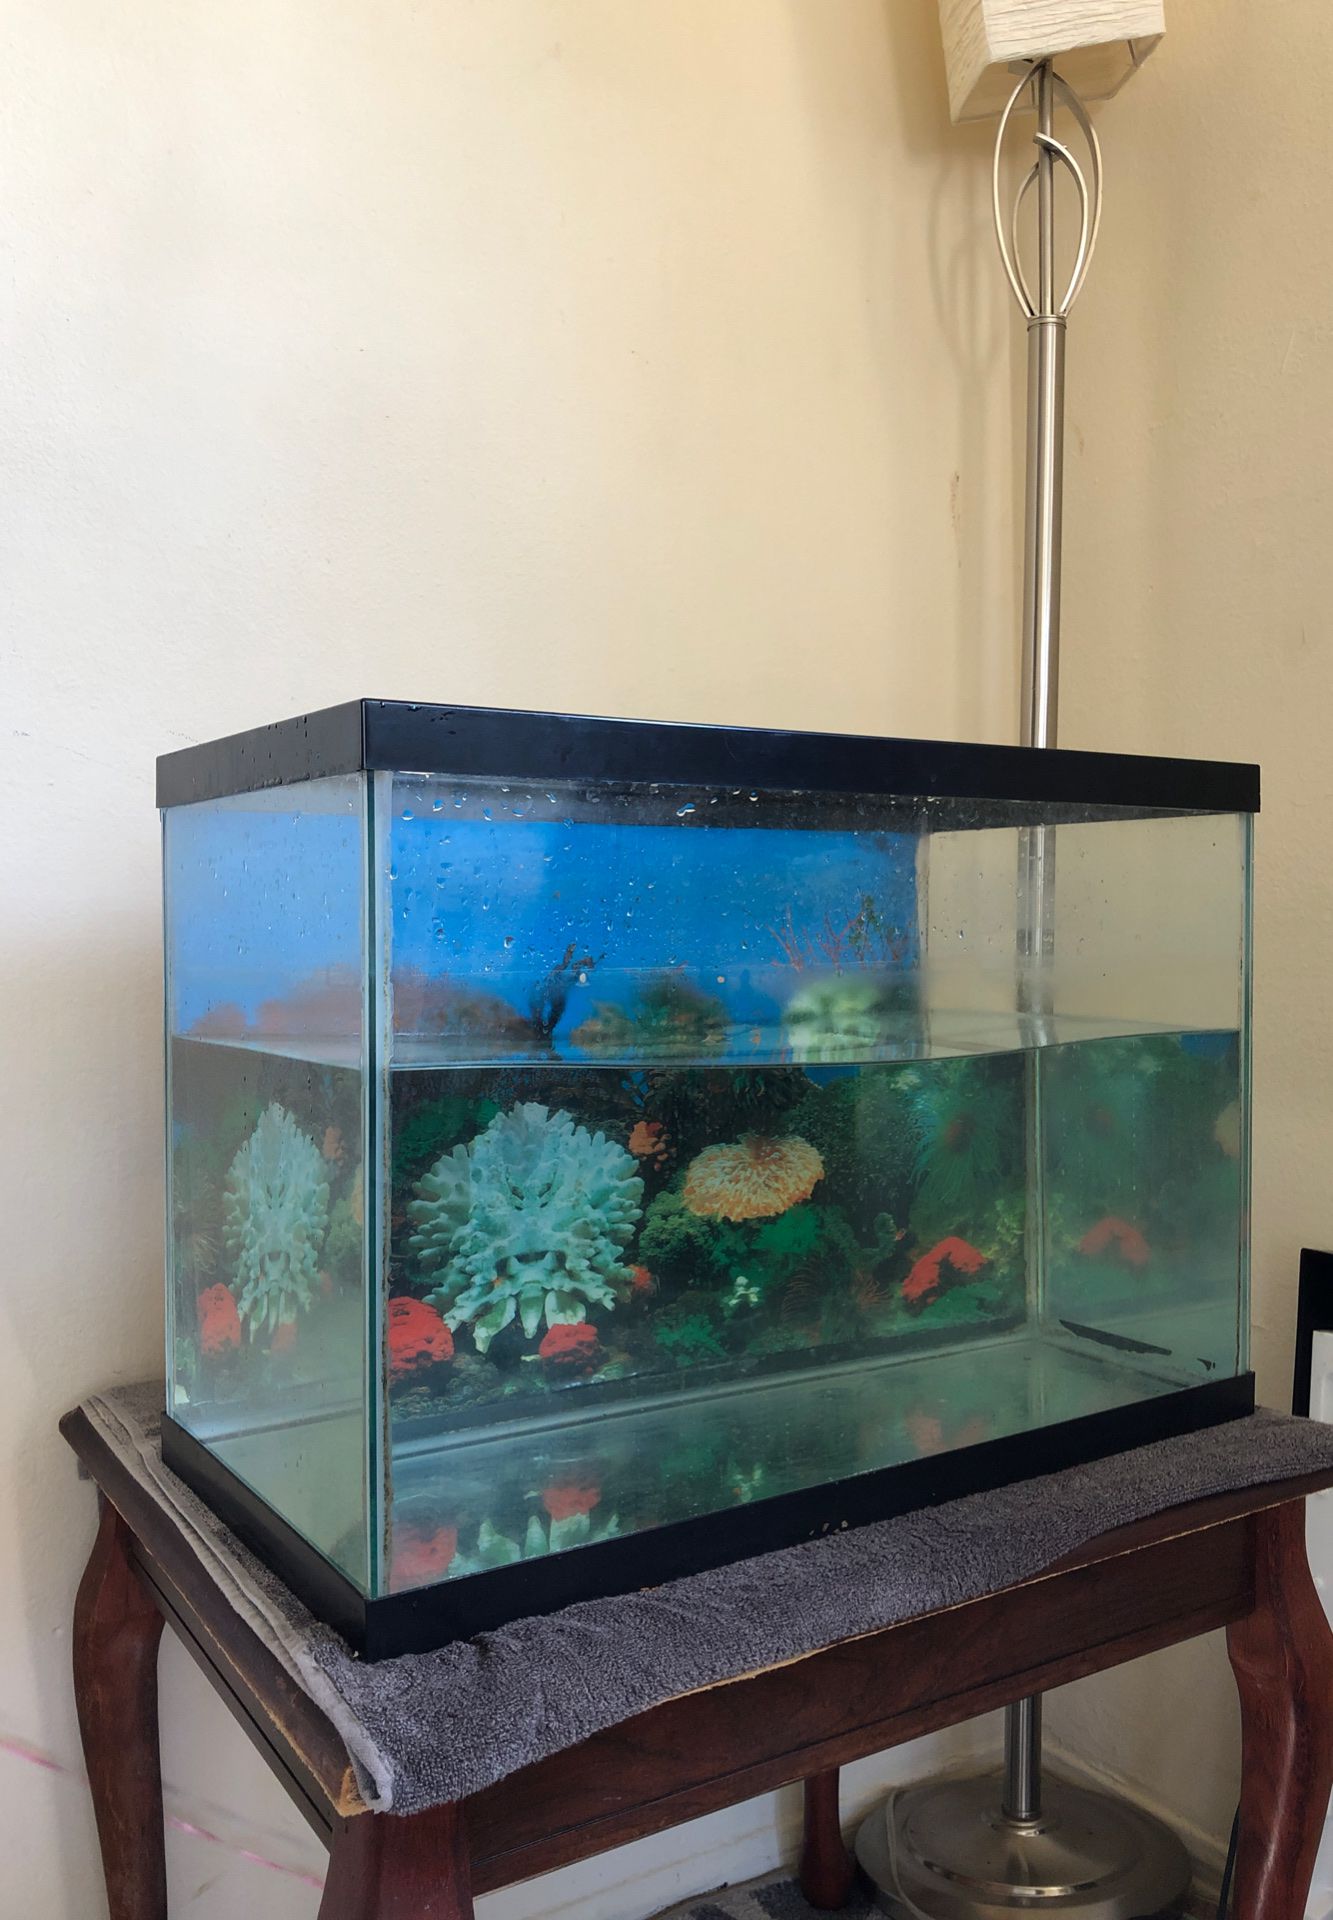 Fish tank / set up